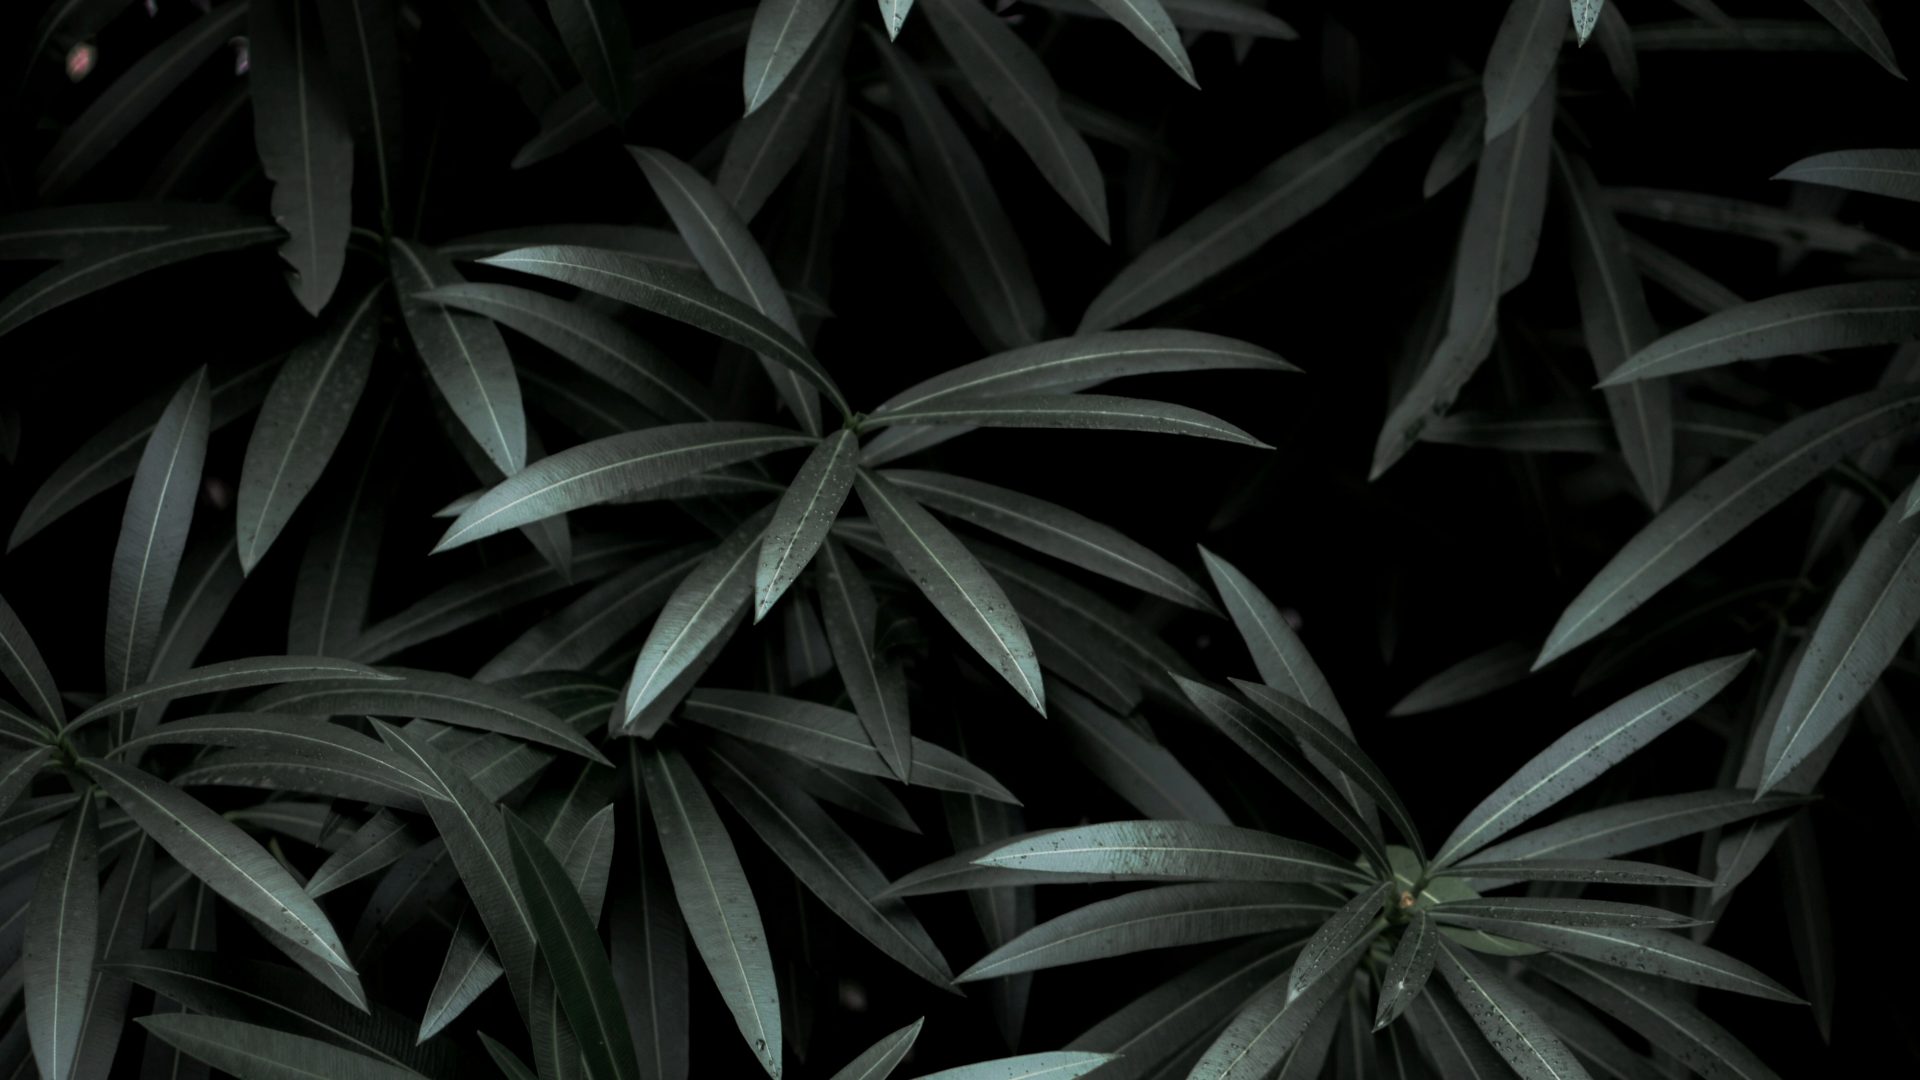 Download wallpaper 1920x1080 leaves bushes green dark full hd hdtv  fhd 1080p hd background